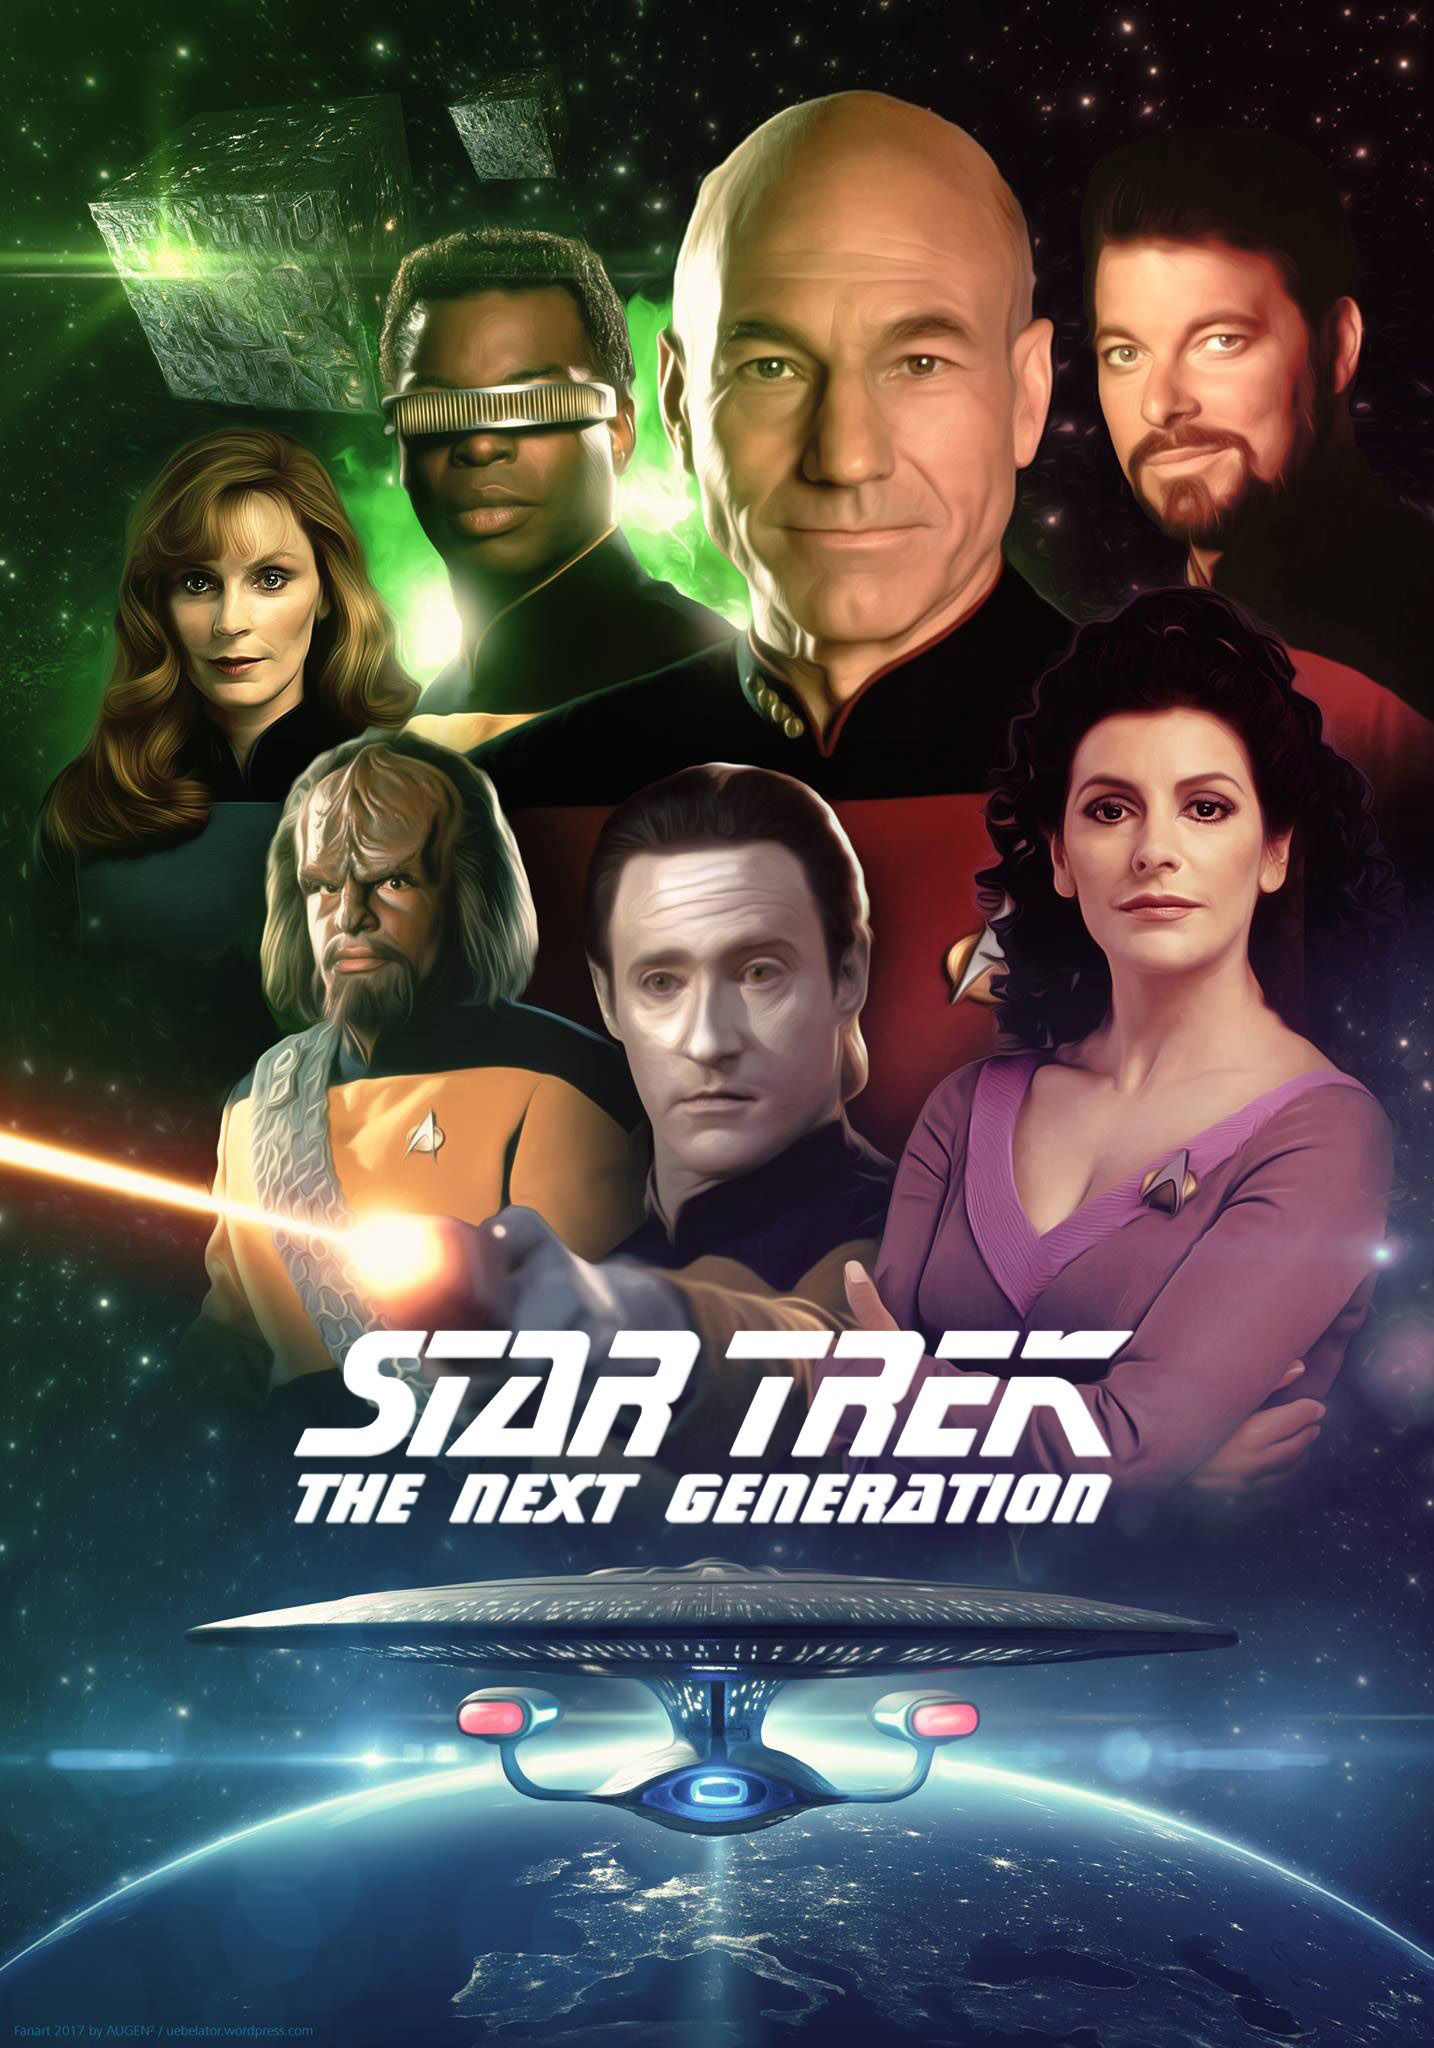 Star Trek: The Next Generation (TV Series 1987–1994)